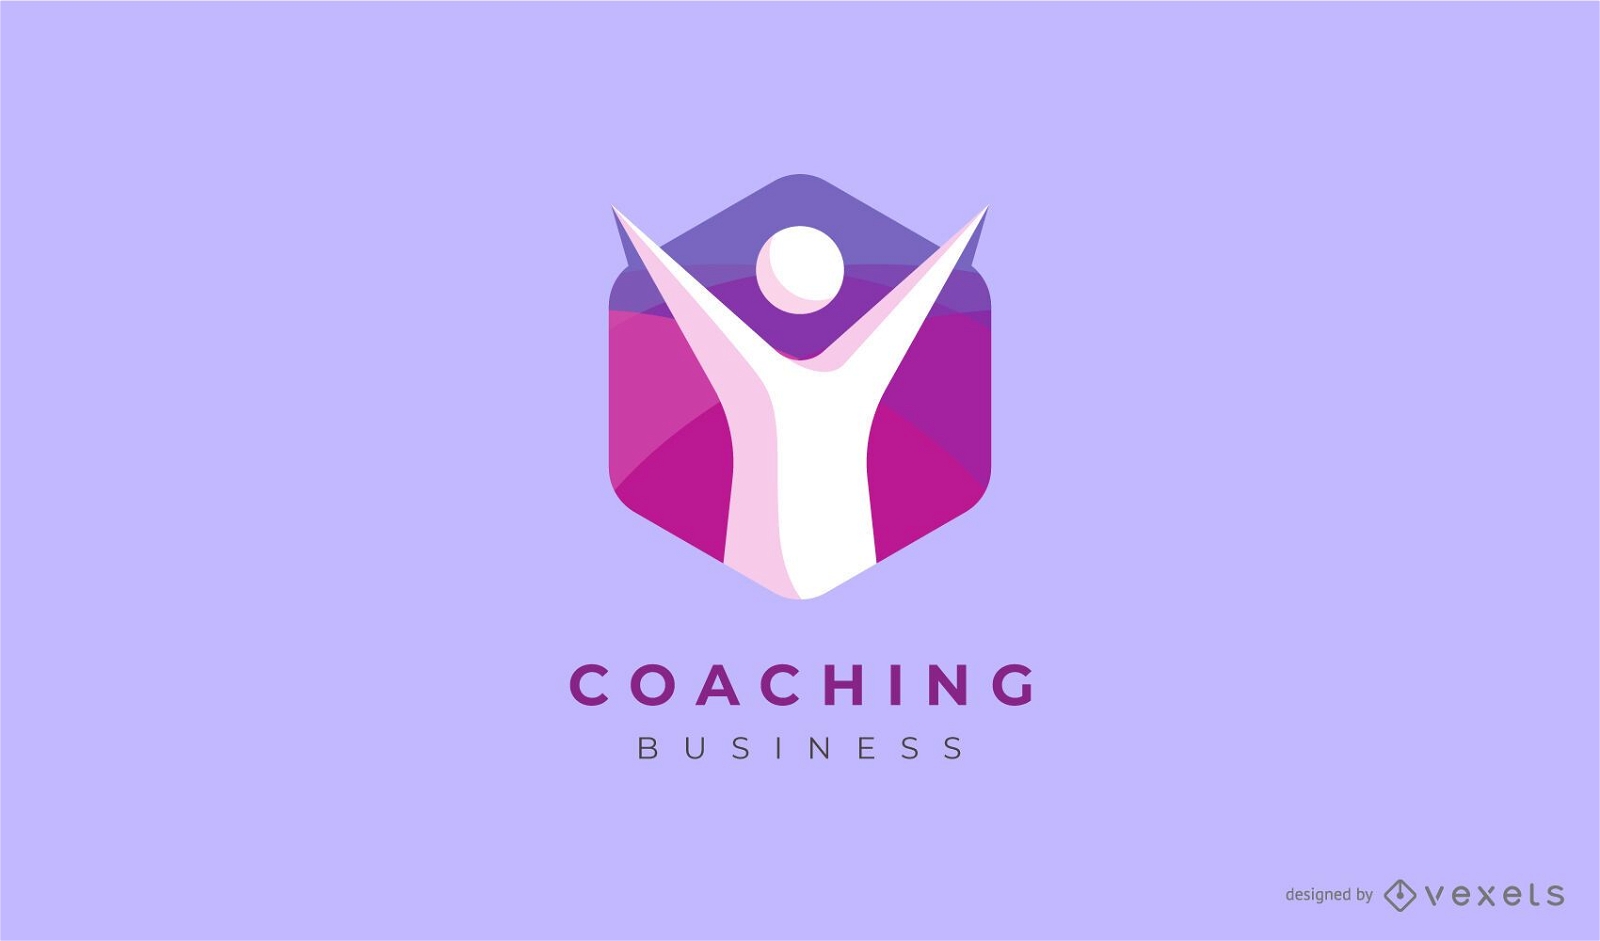 Coaching Business Logo Design Vector Download